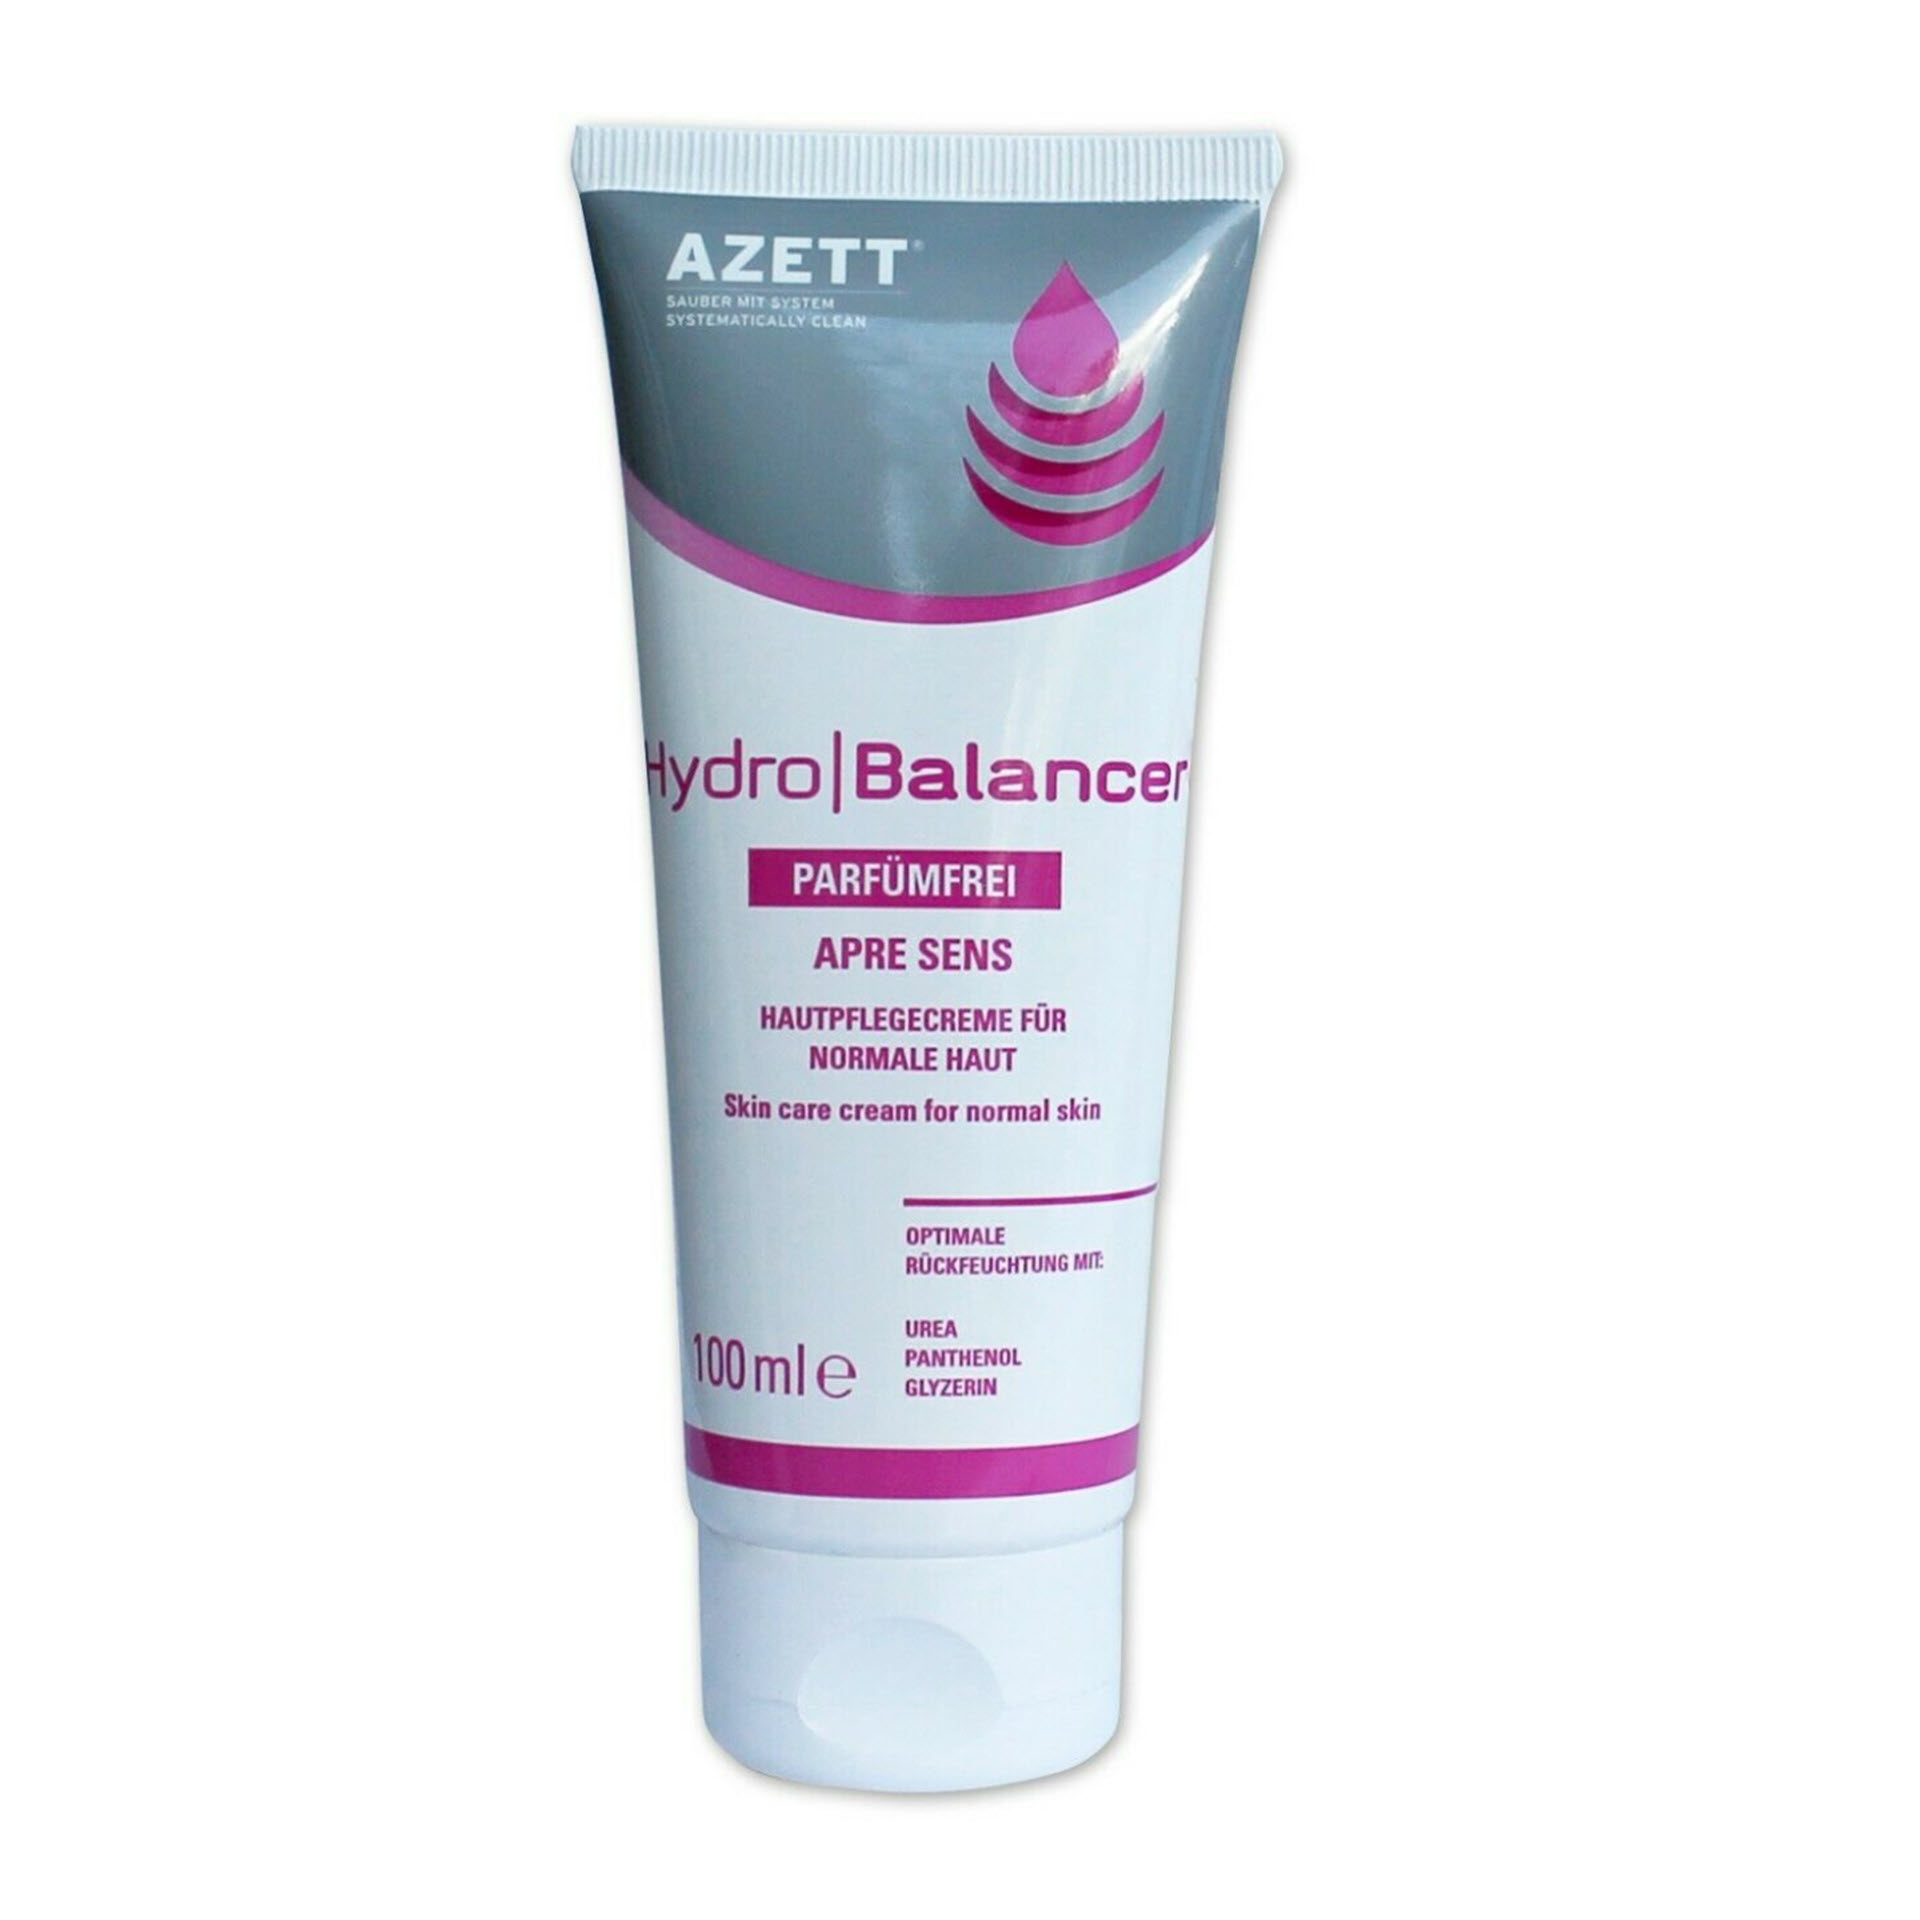 Azett Hydrobalancer / Apre Sens Hautpflegecreme - 100 ml Tube - 915000010